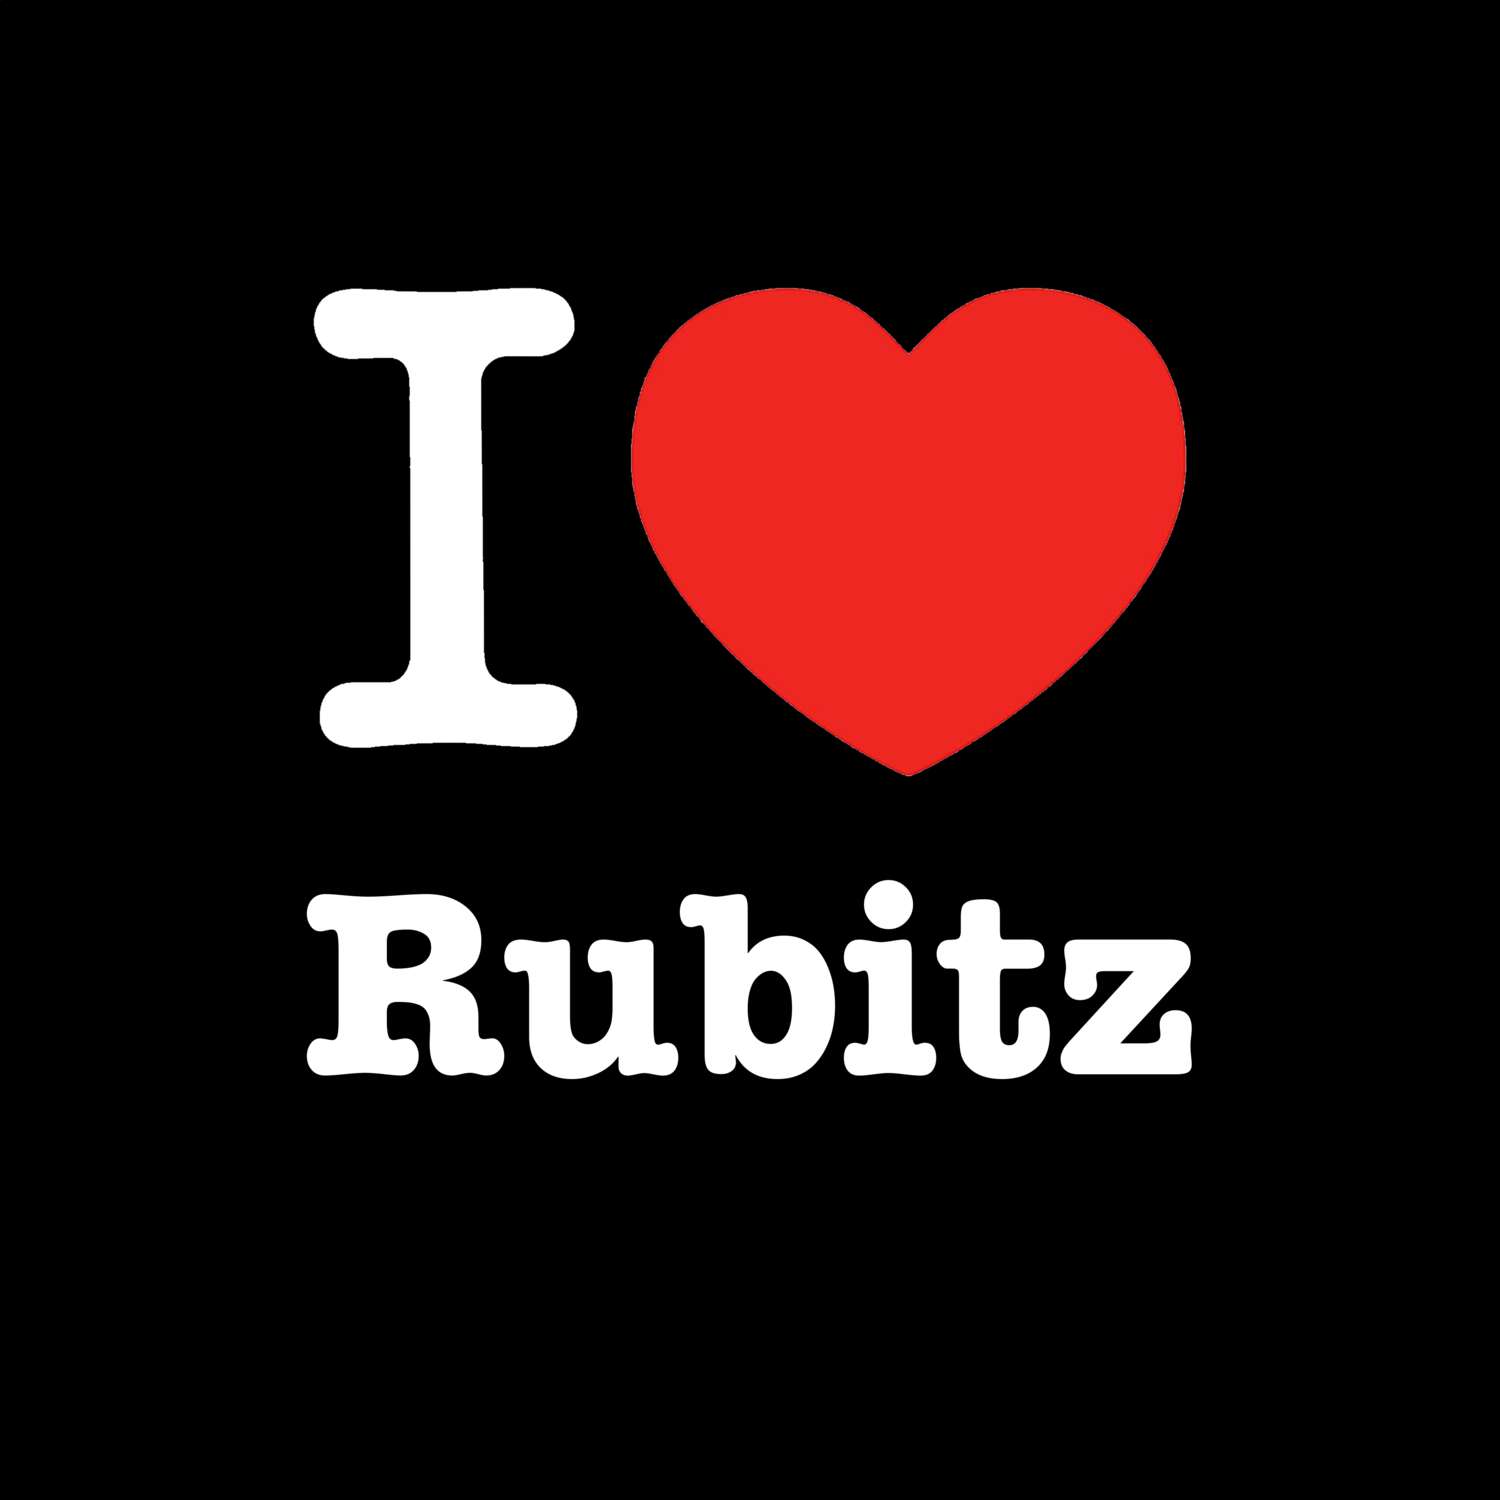 Rubitz T-Shirt »I love«